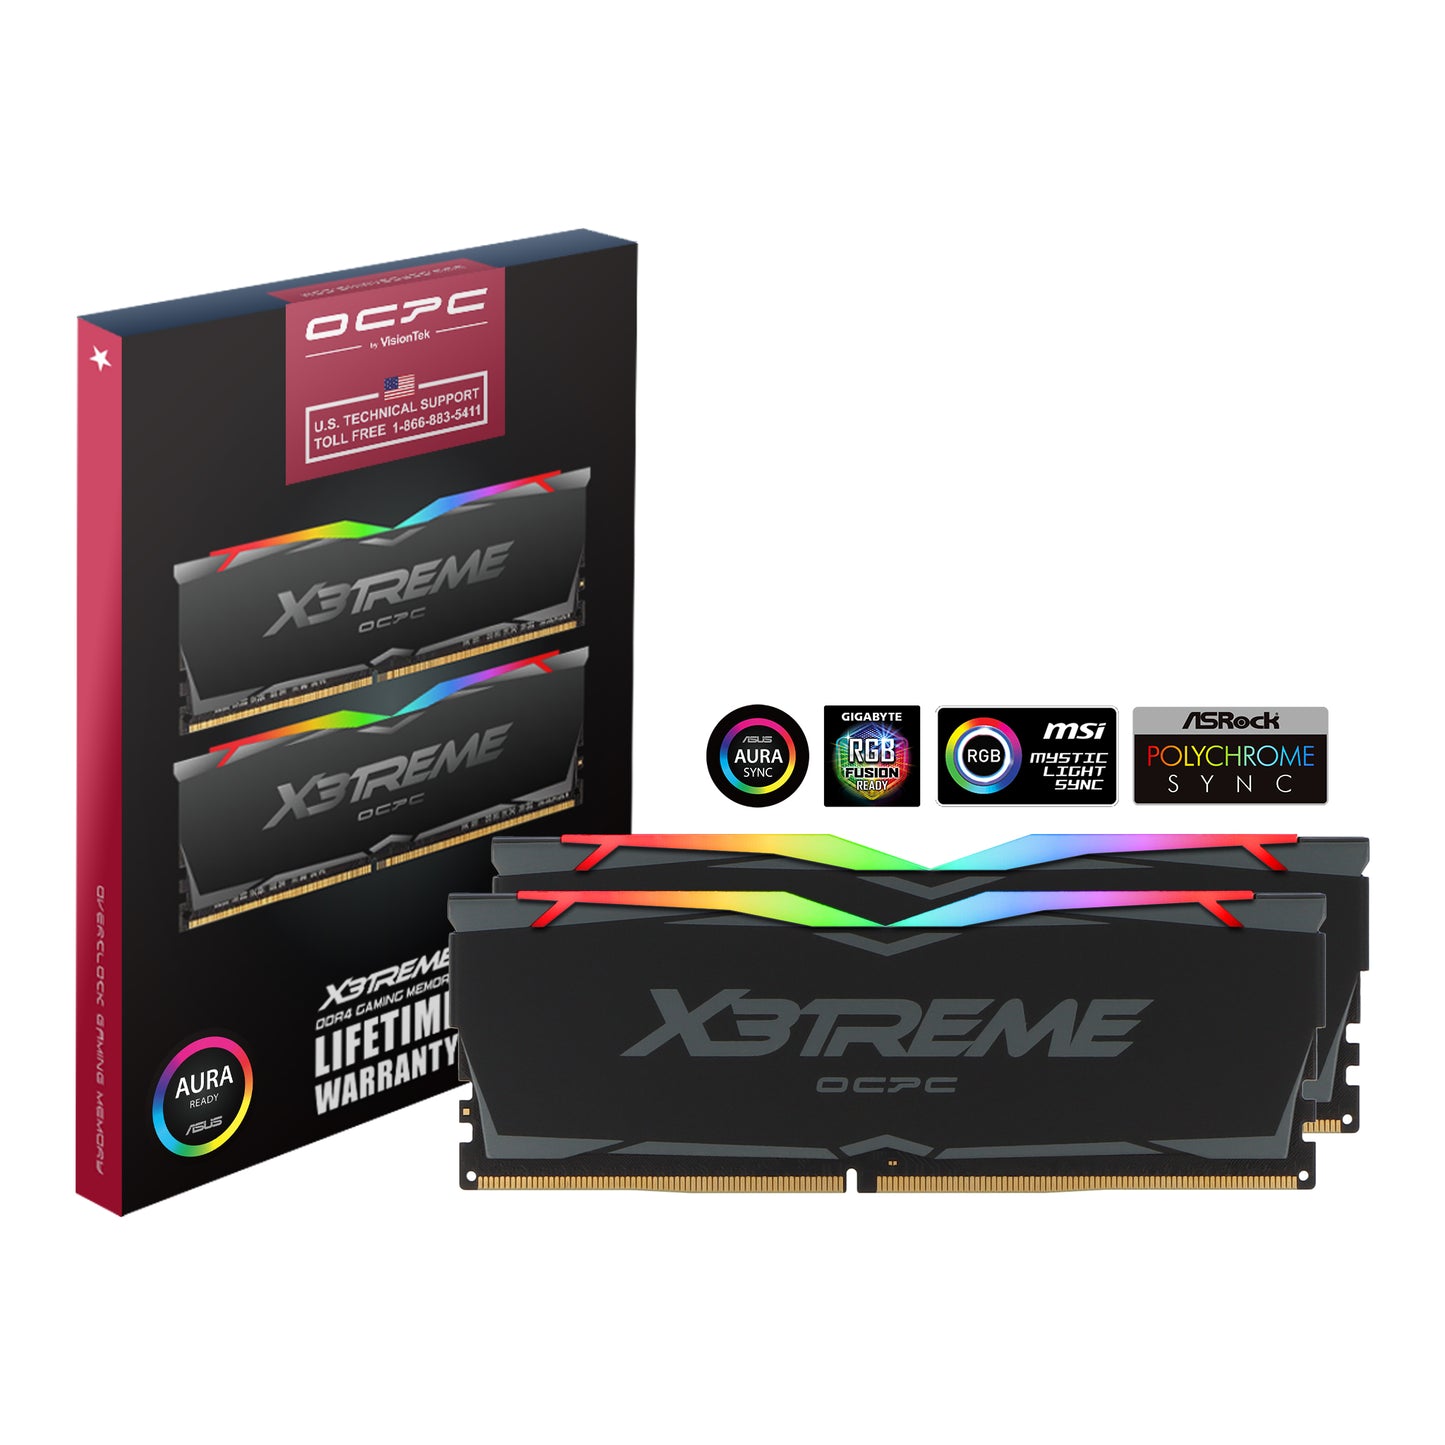 OCPC X3Treme Aura RGB DDR4 16GB (2x8GB) - 3200MHz - CL15 - DIMM- Desktop - Black